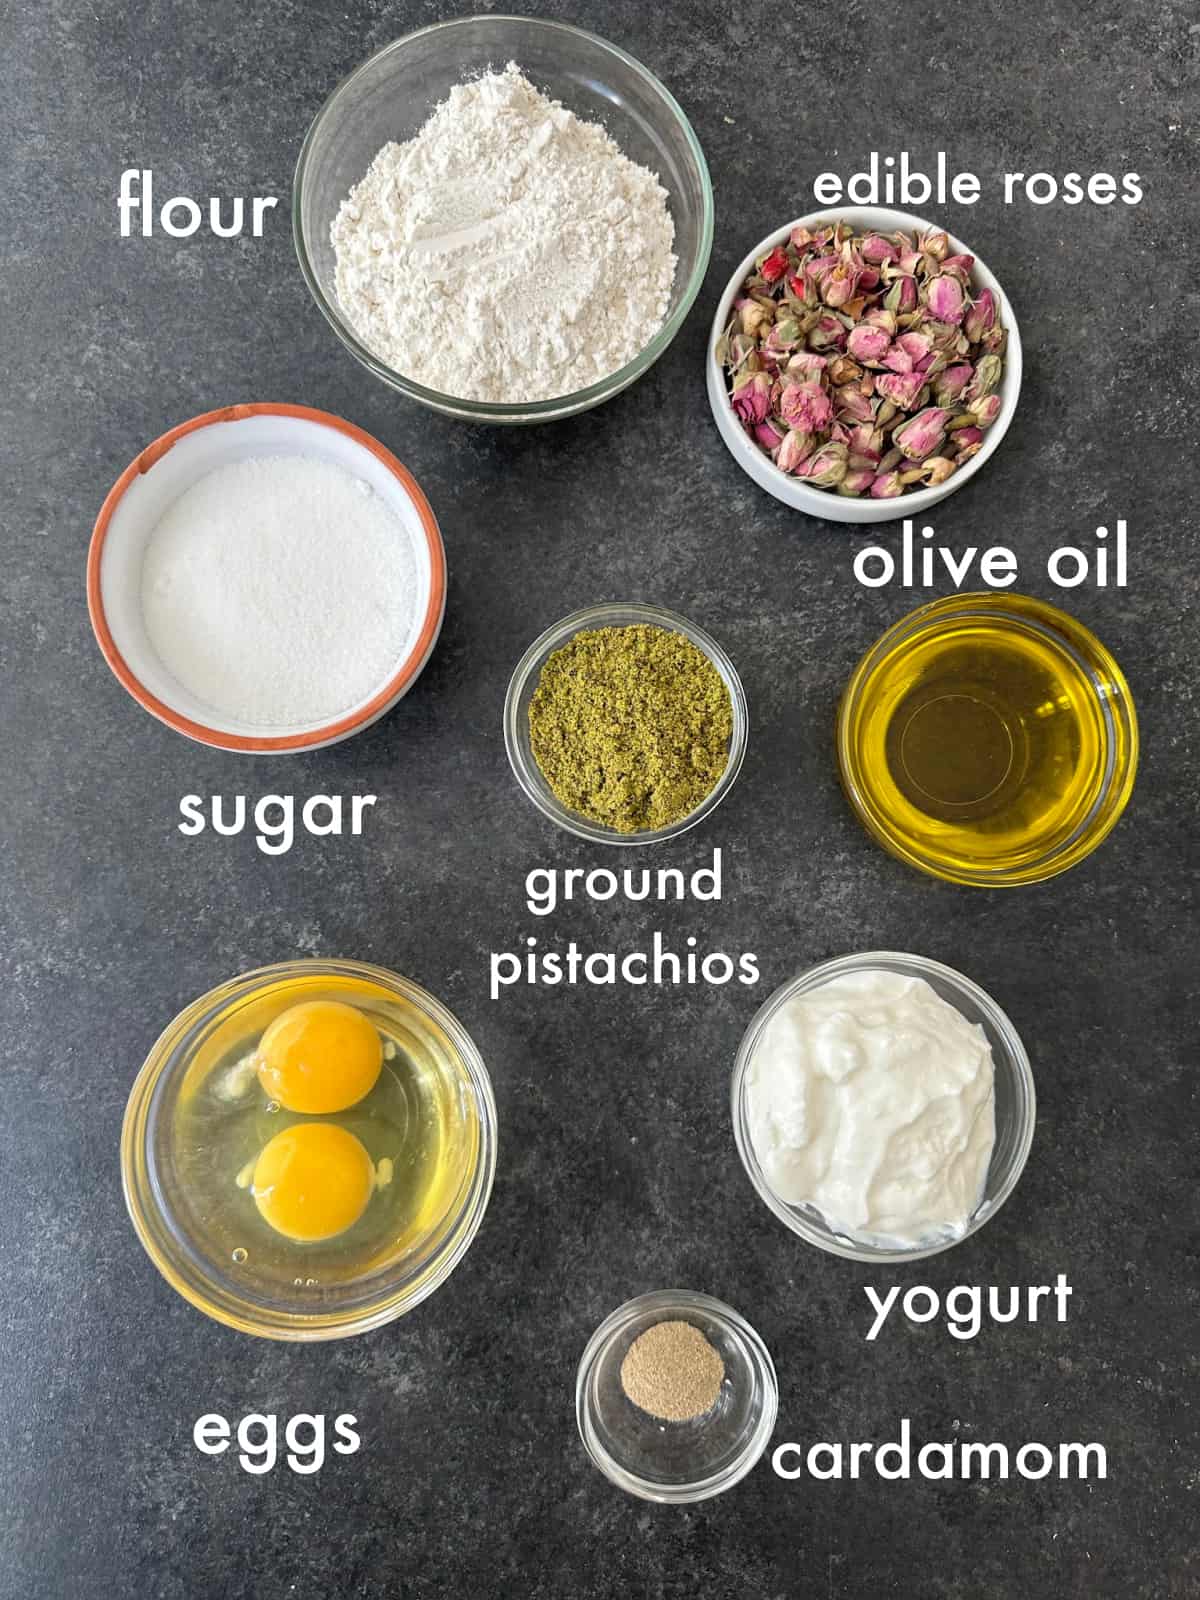 To make this cake you need eggs, sugar, yogurt, cardamom, rosewater, flour, baking powder, baking soda and pistachios. 